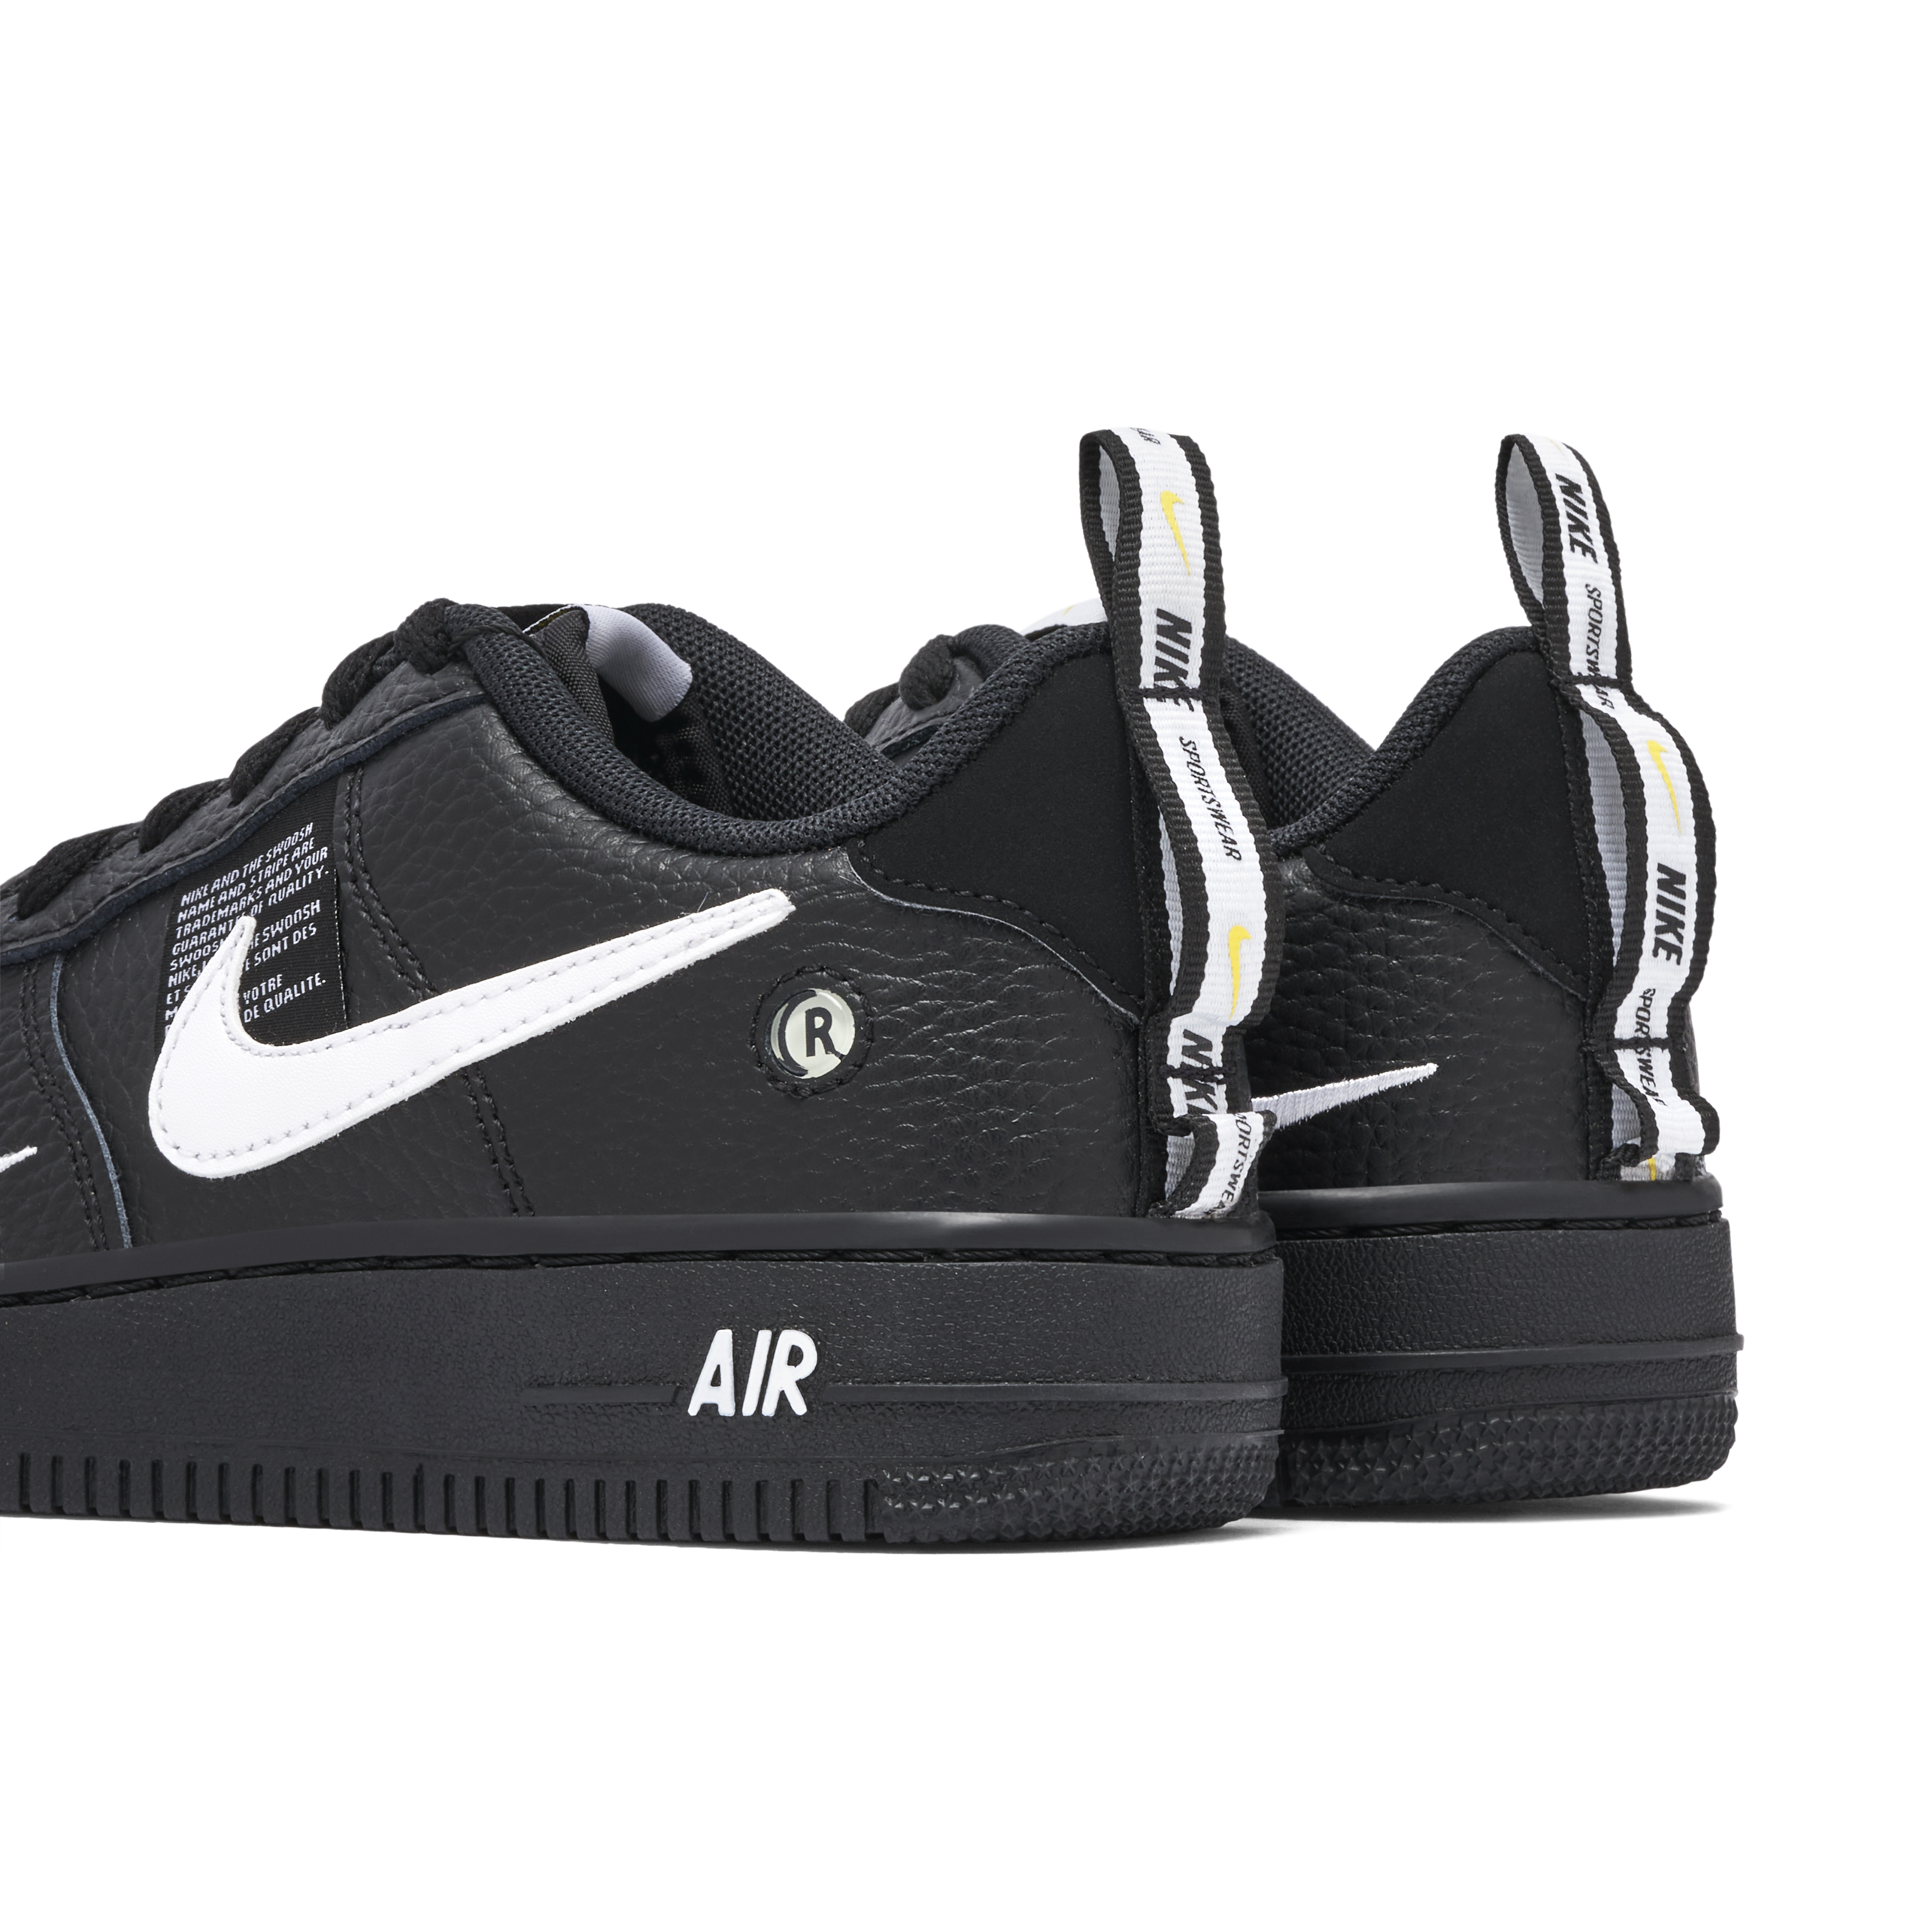 Buy Nike Air Force 1 LV8 Utility Kids Black/White AR1708-001 (Size